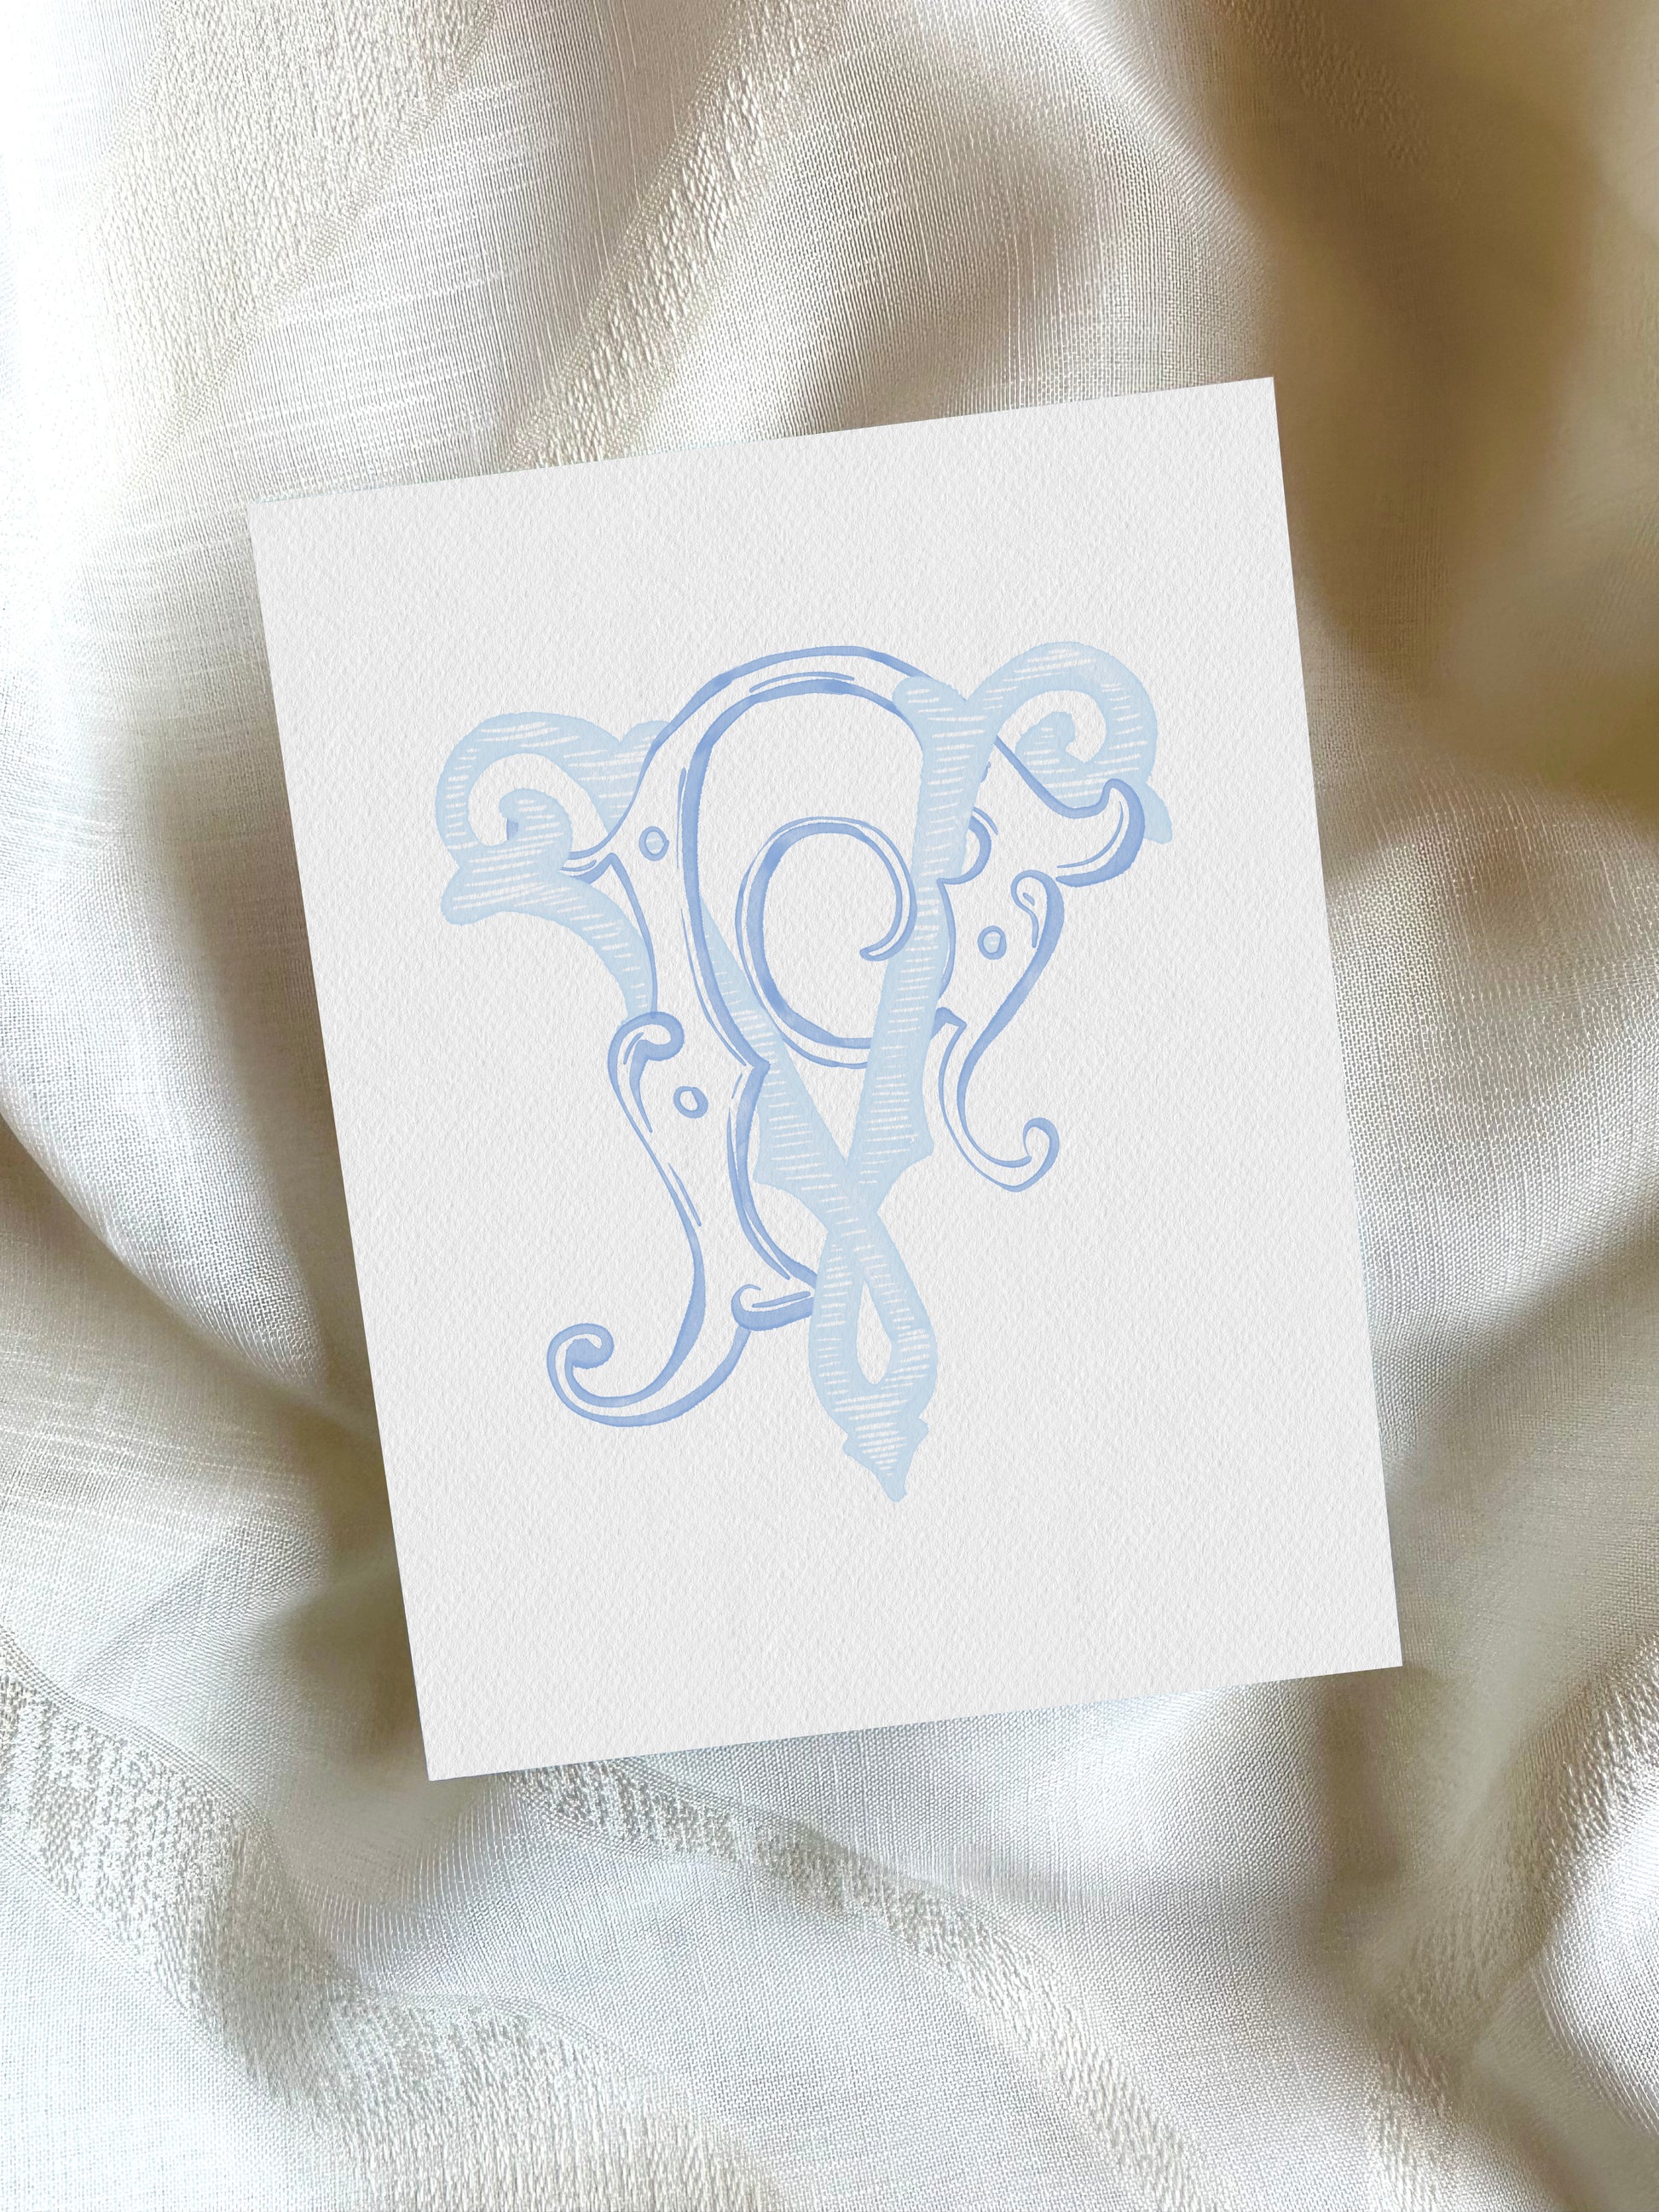 2 Letter Monogram with Letters PV VP | Digital Download - Wedding Monogram SVG, Personal Logo, Wedding Logo for Wedding Invitations The Wedding Crest Lab